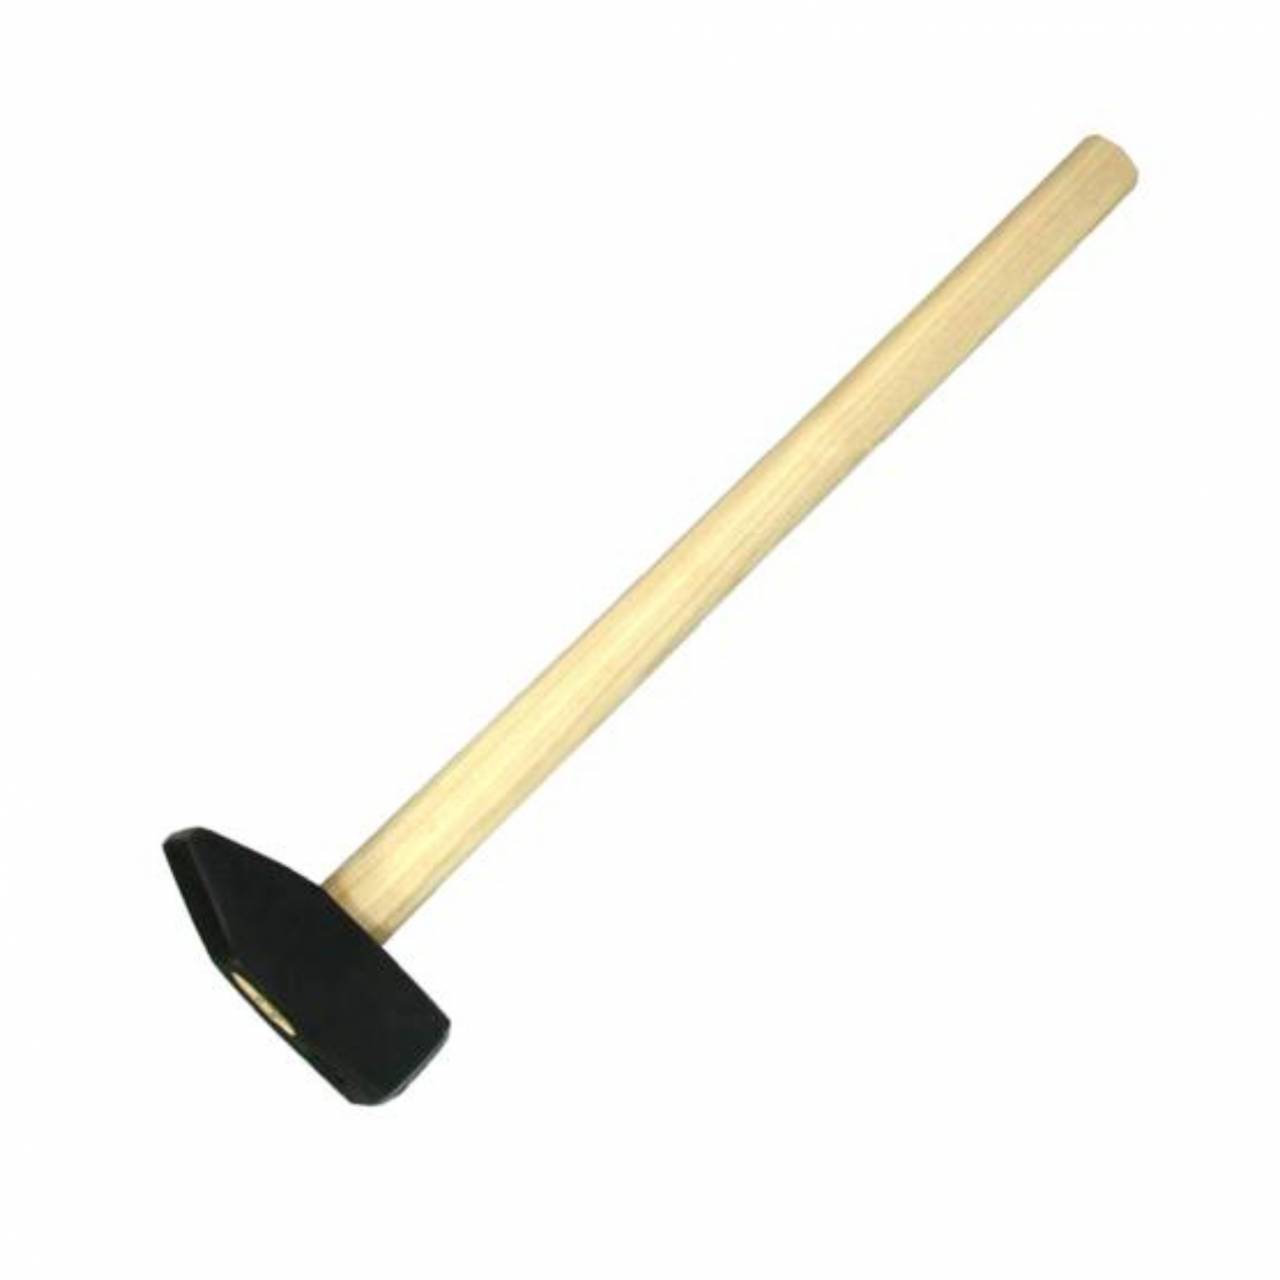 Vorschlaghammer 8,0 kg 'P-Tools'